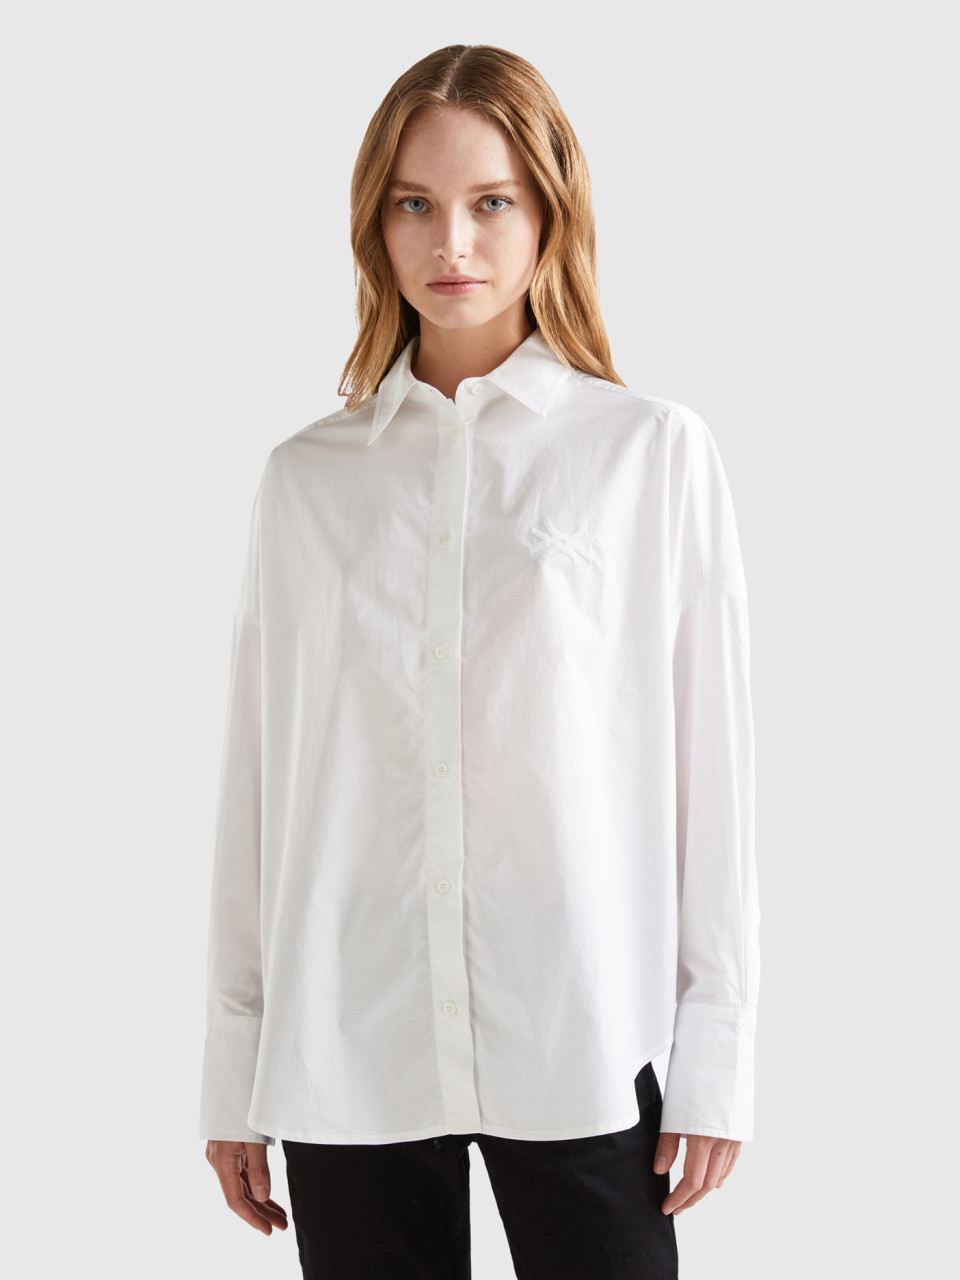 Benetton, Oversized 100% Cotton Shirt, White, Women